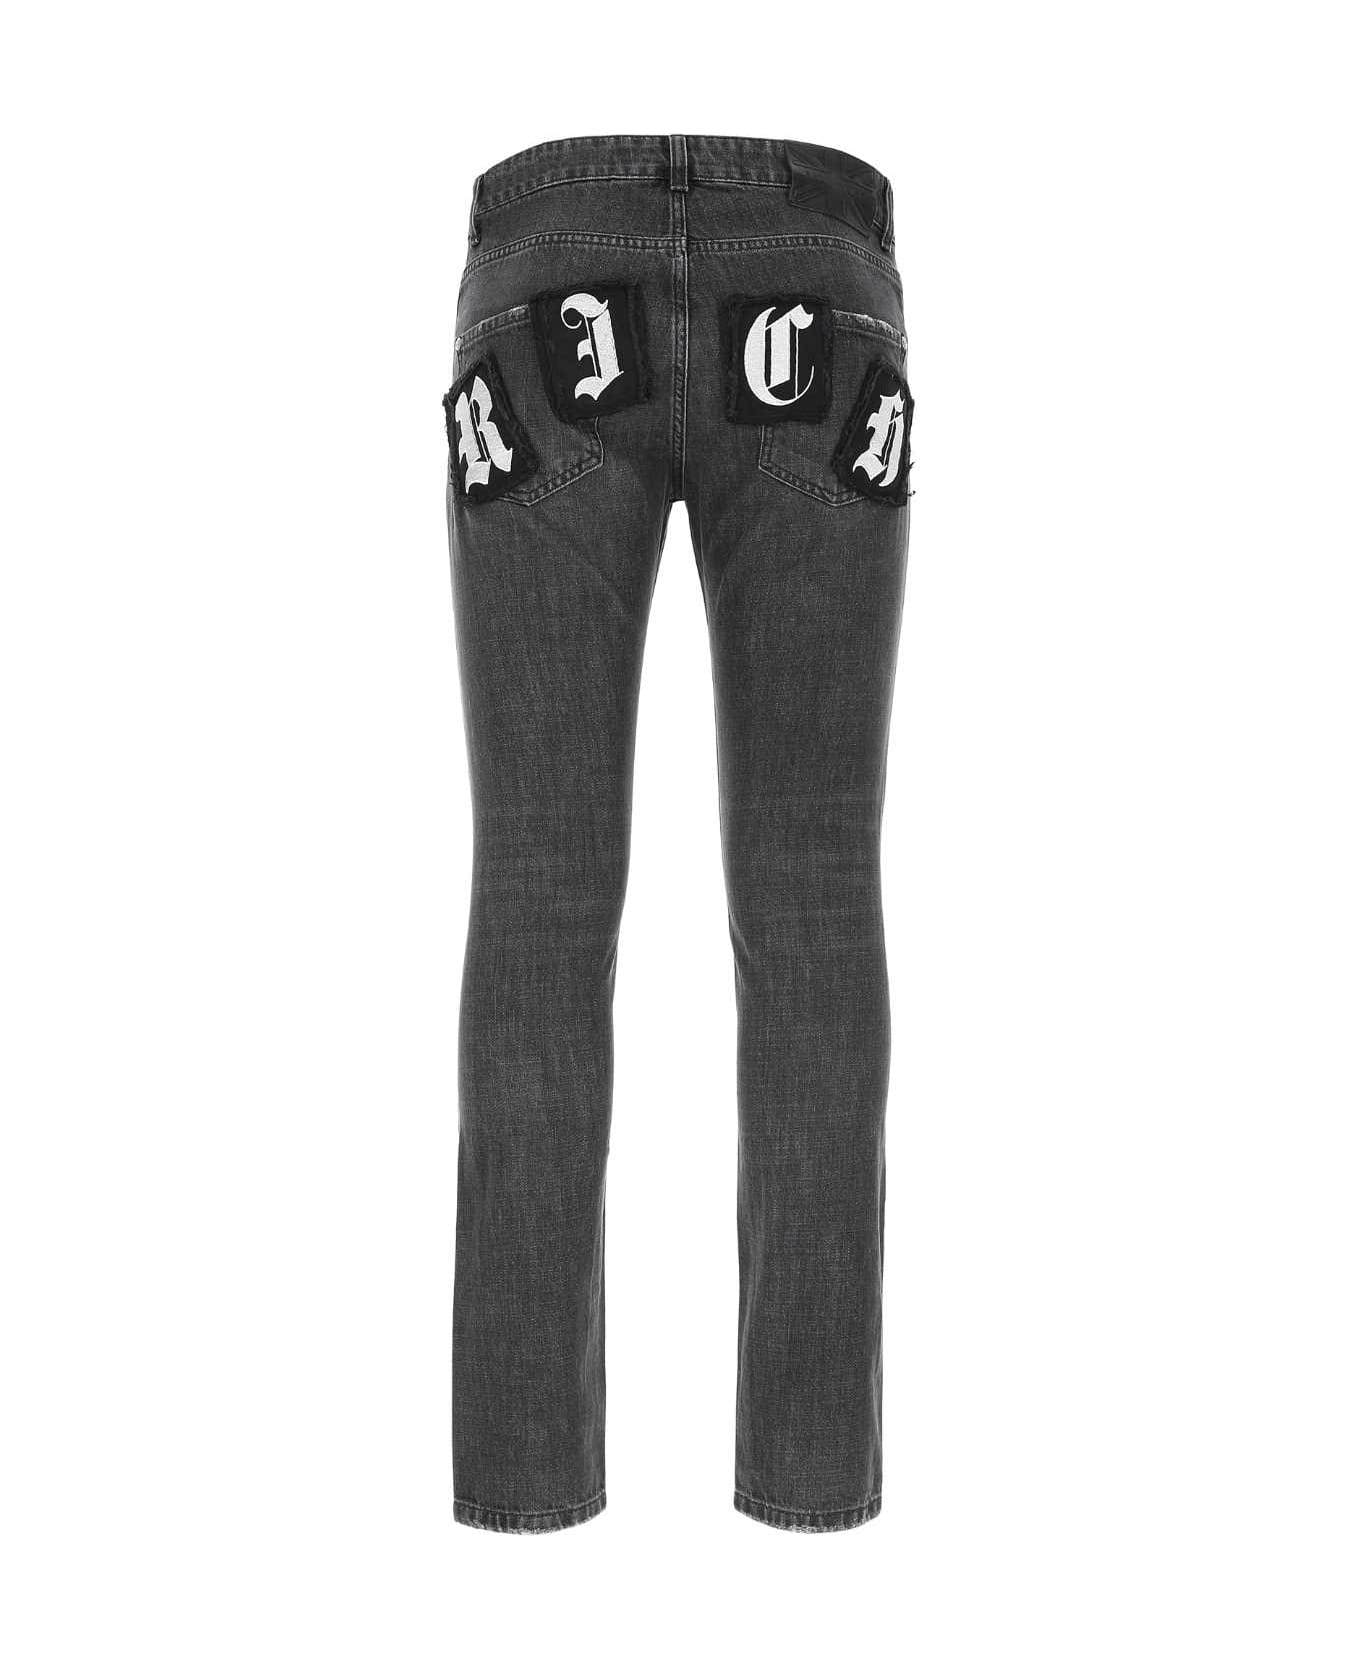 John Richmond Charcoal Grey Denim Jeans - DBLACK デニム